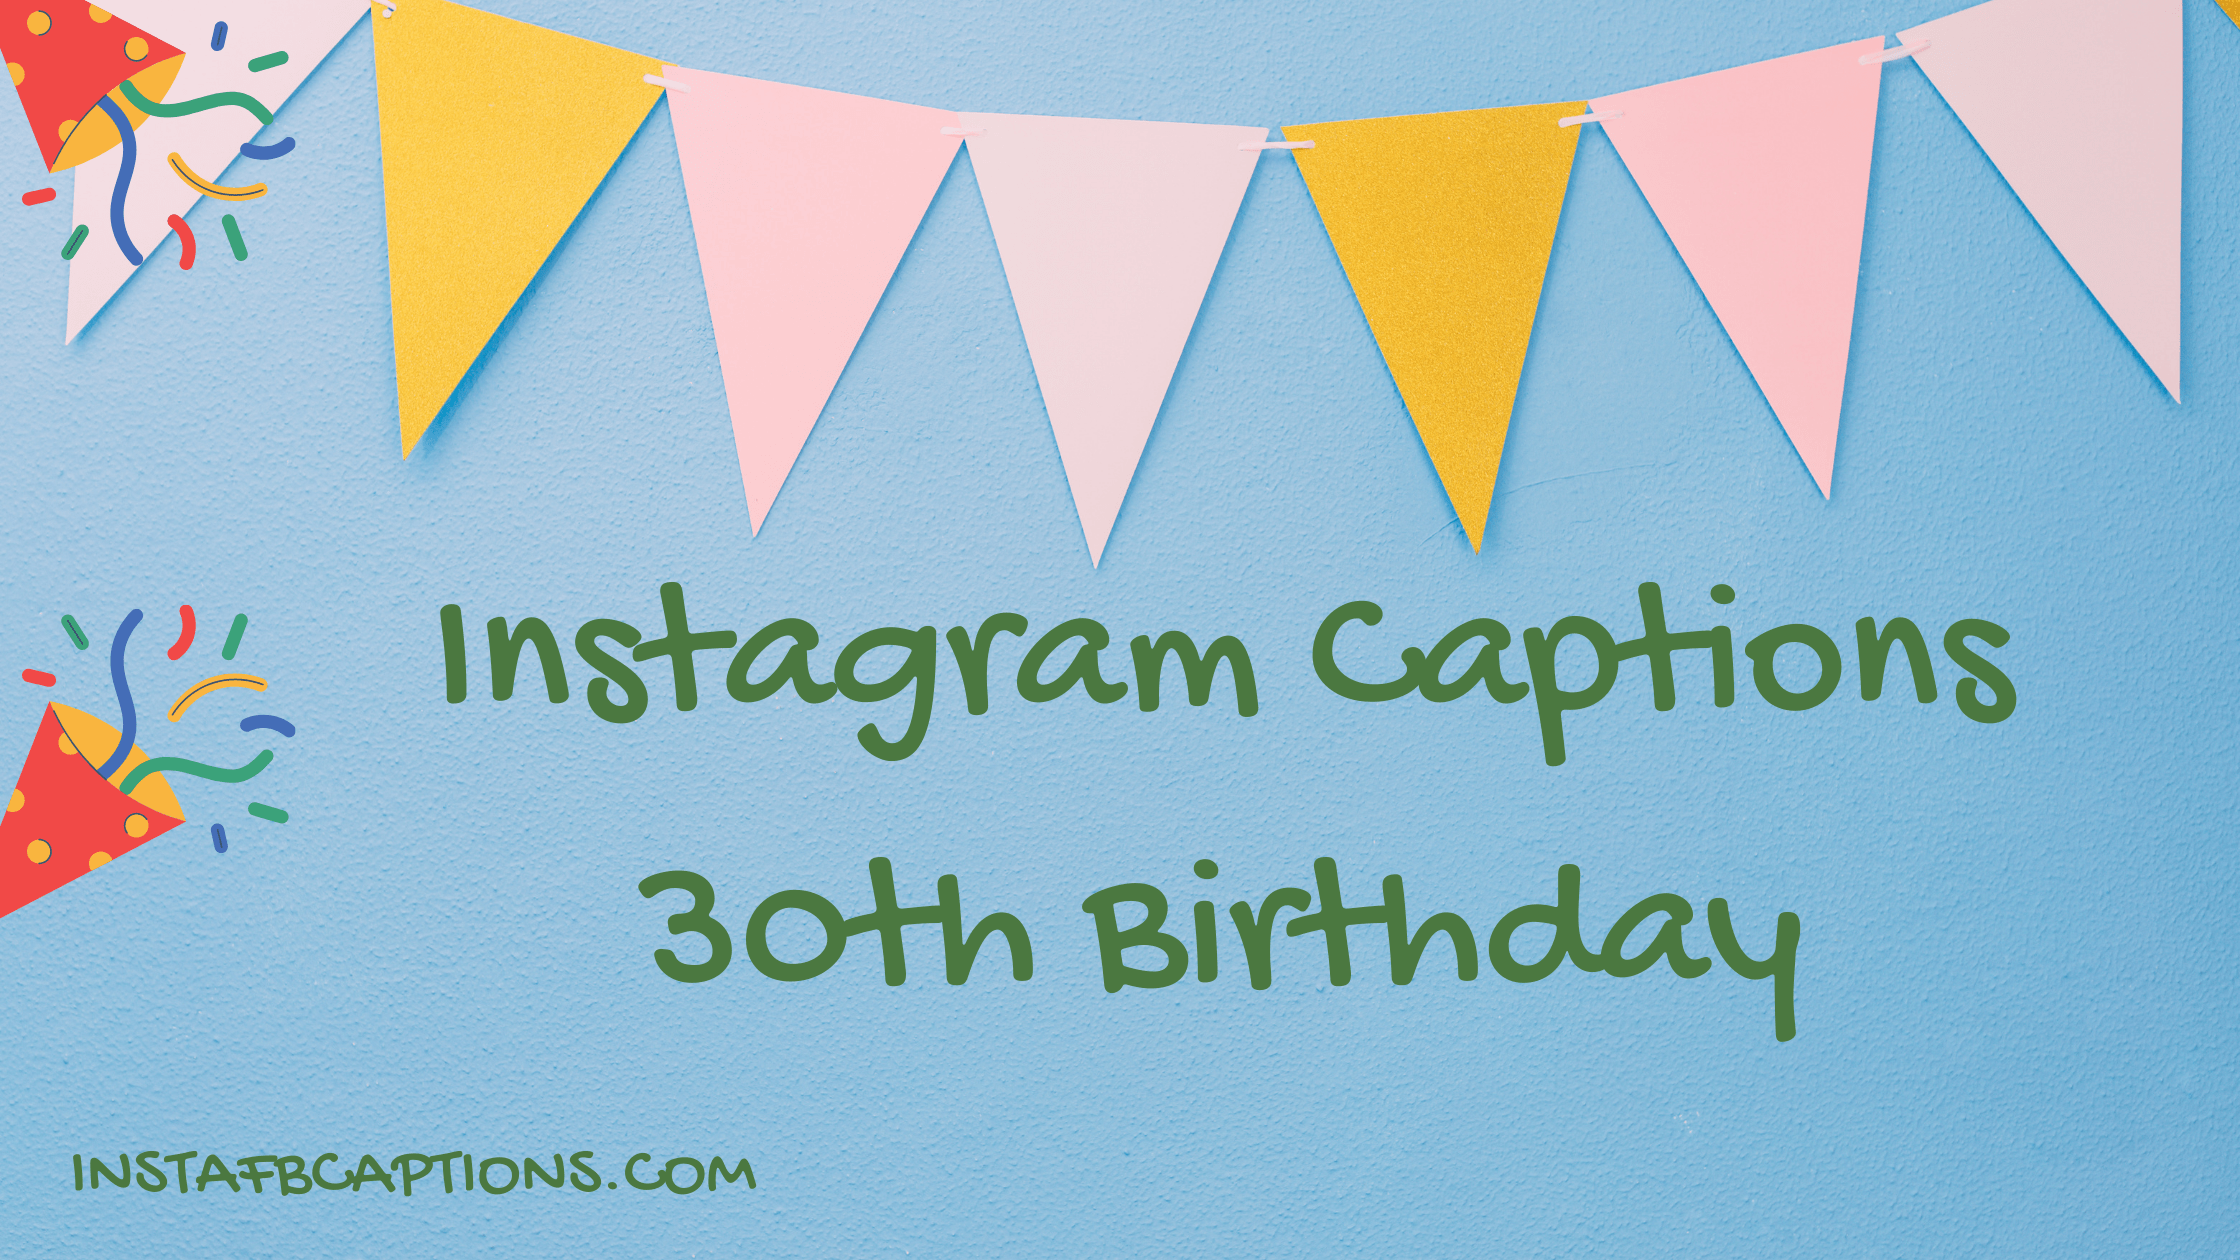 Instagram Captions 30th Birthday  - Instagram Captions 30th Birthday - 30th Birthday Instagram Captions in 2022